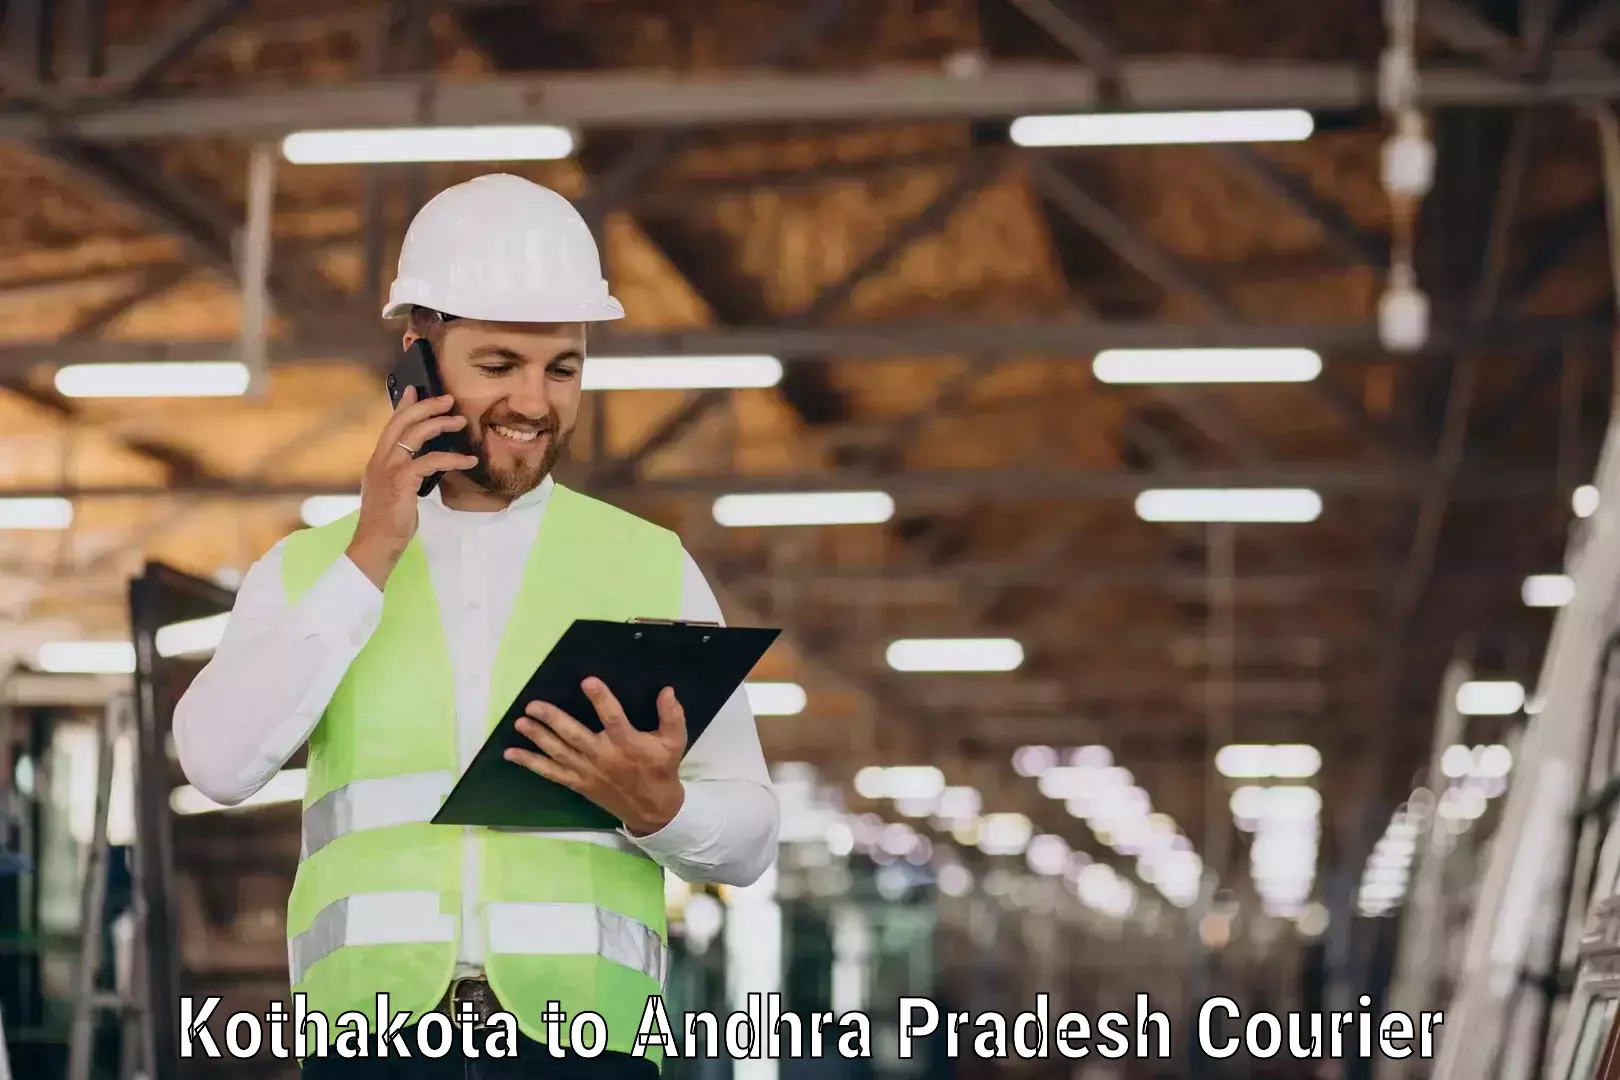 State-of-the-art courier technology Kothakota to Palasa